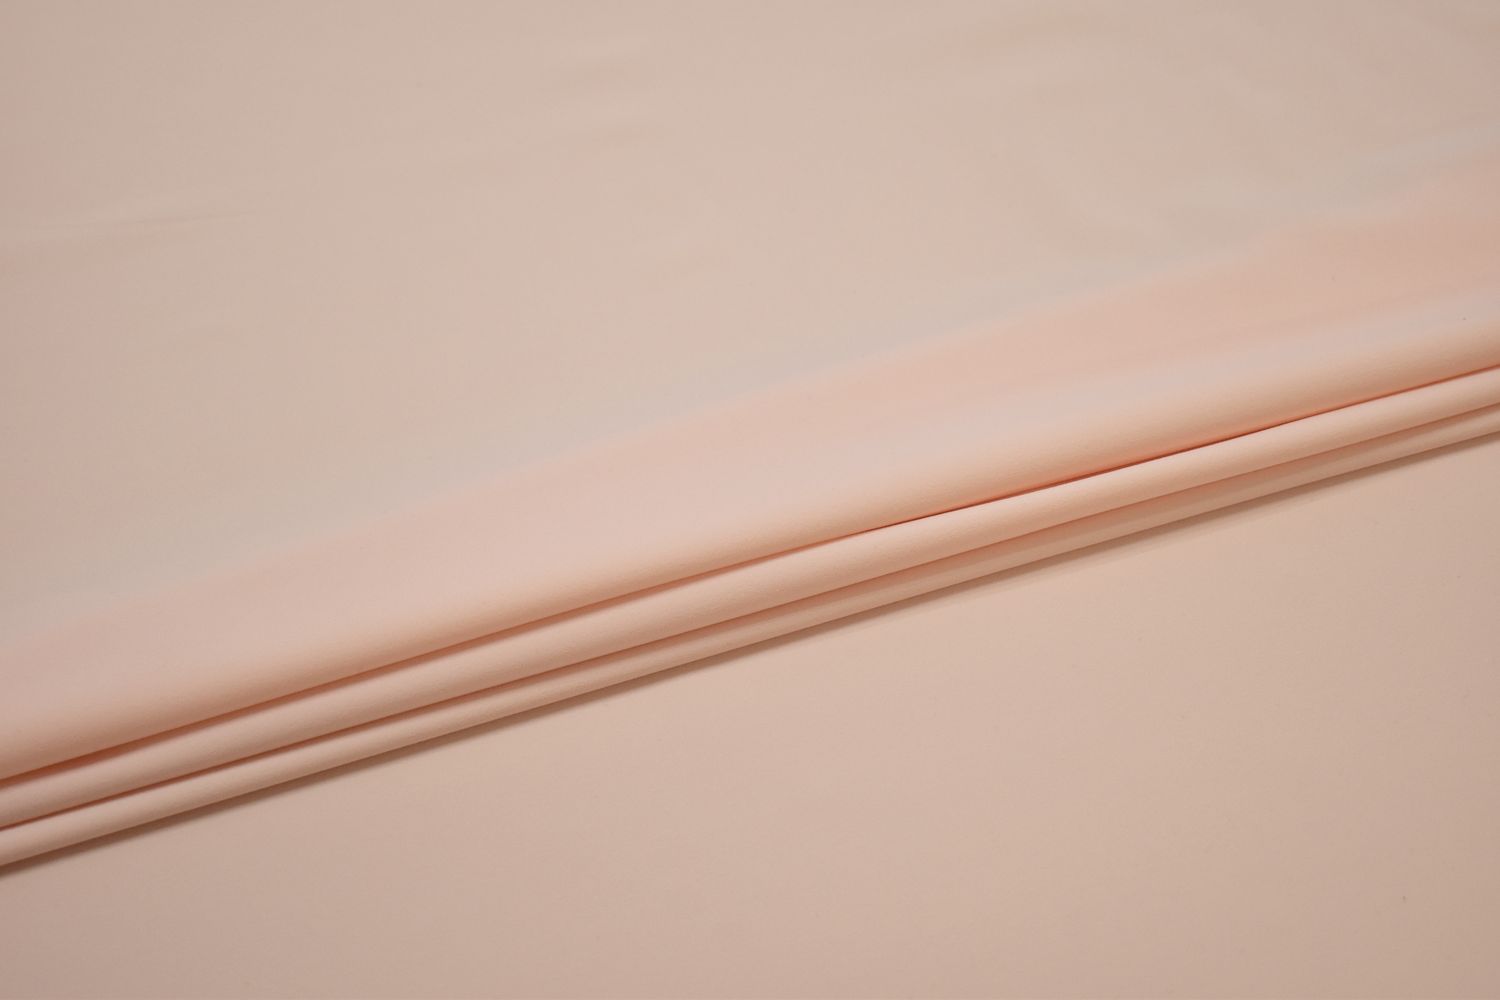 Бифлекс матовый розово-персикового цвета W-130244